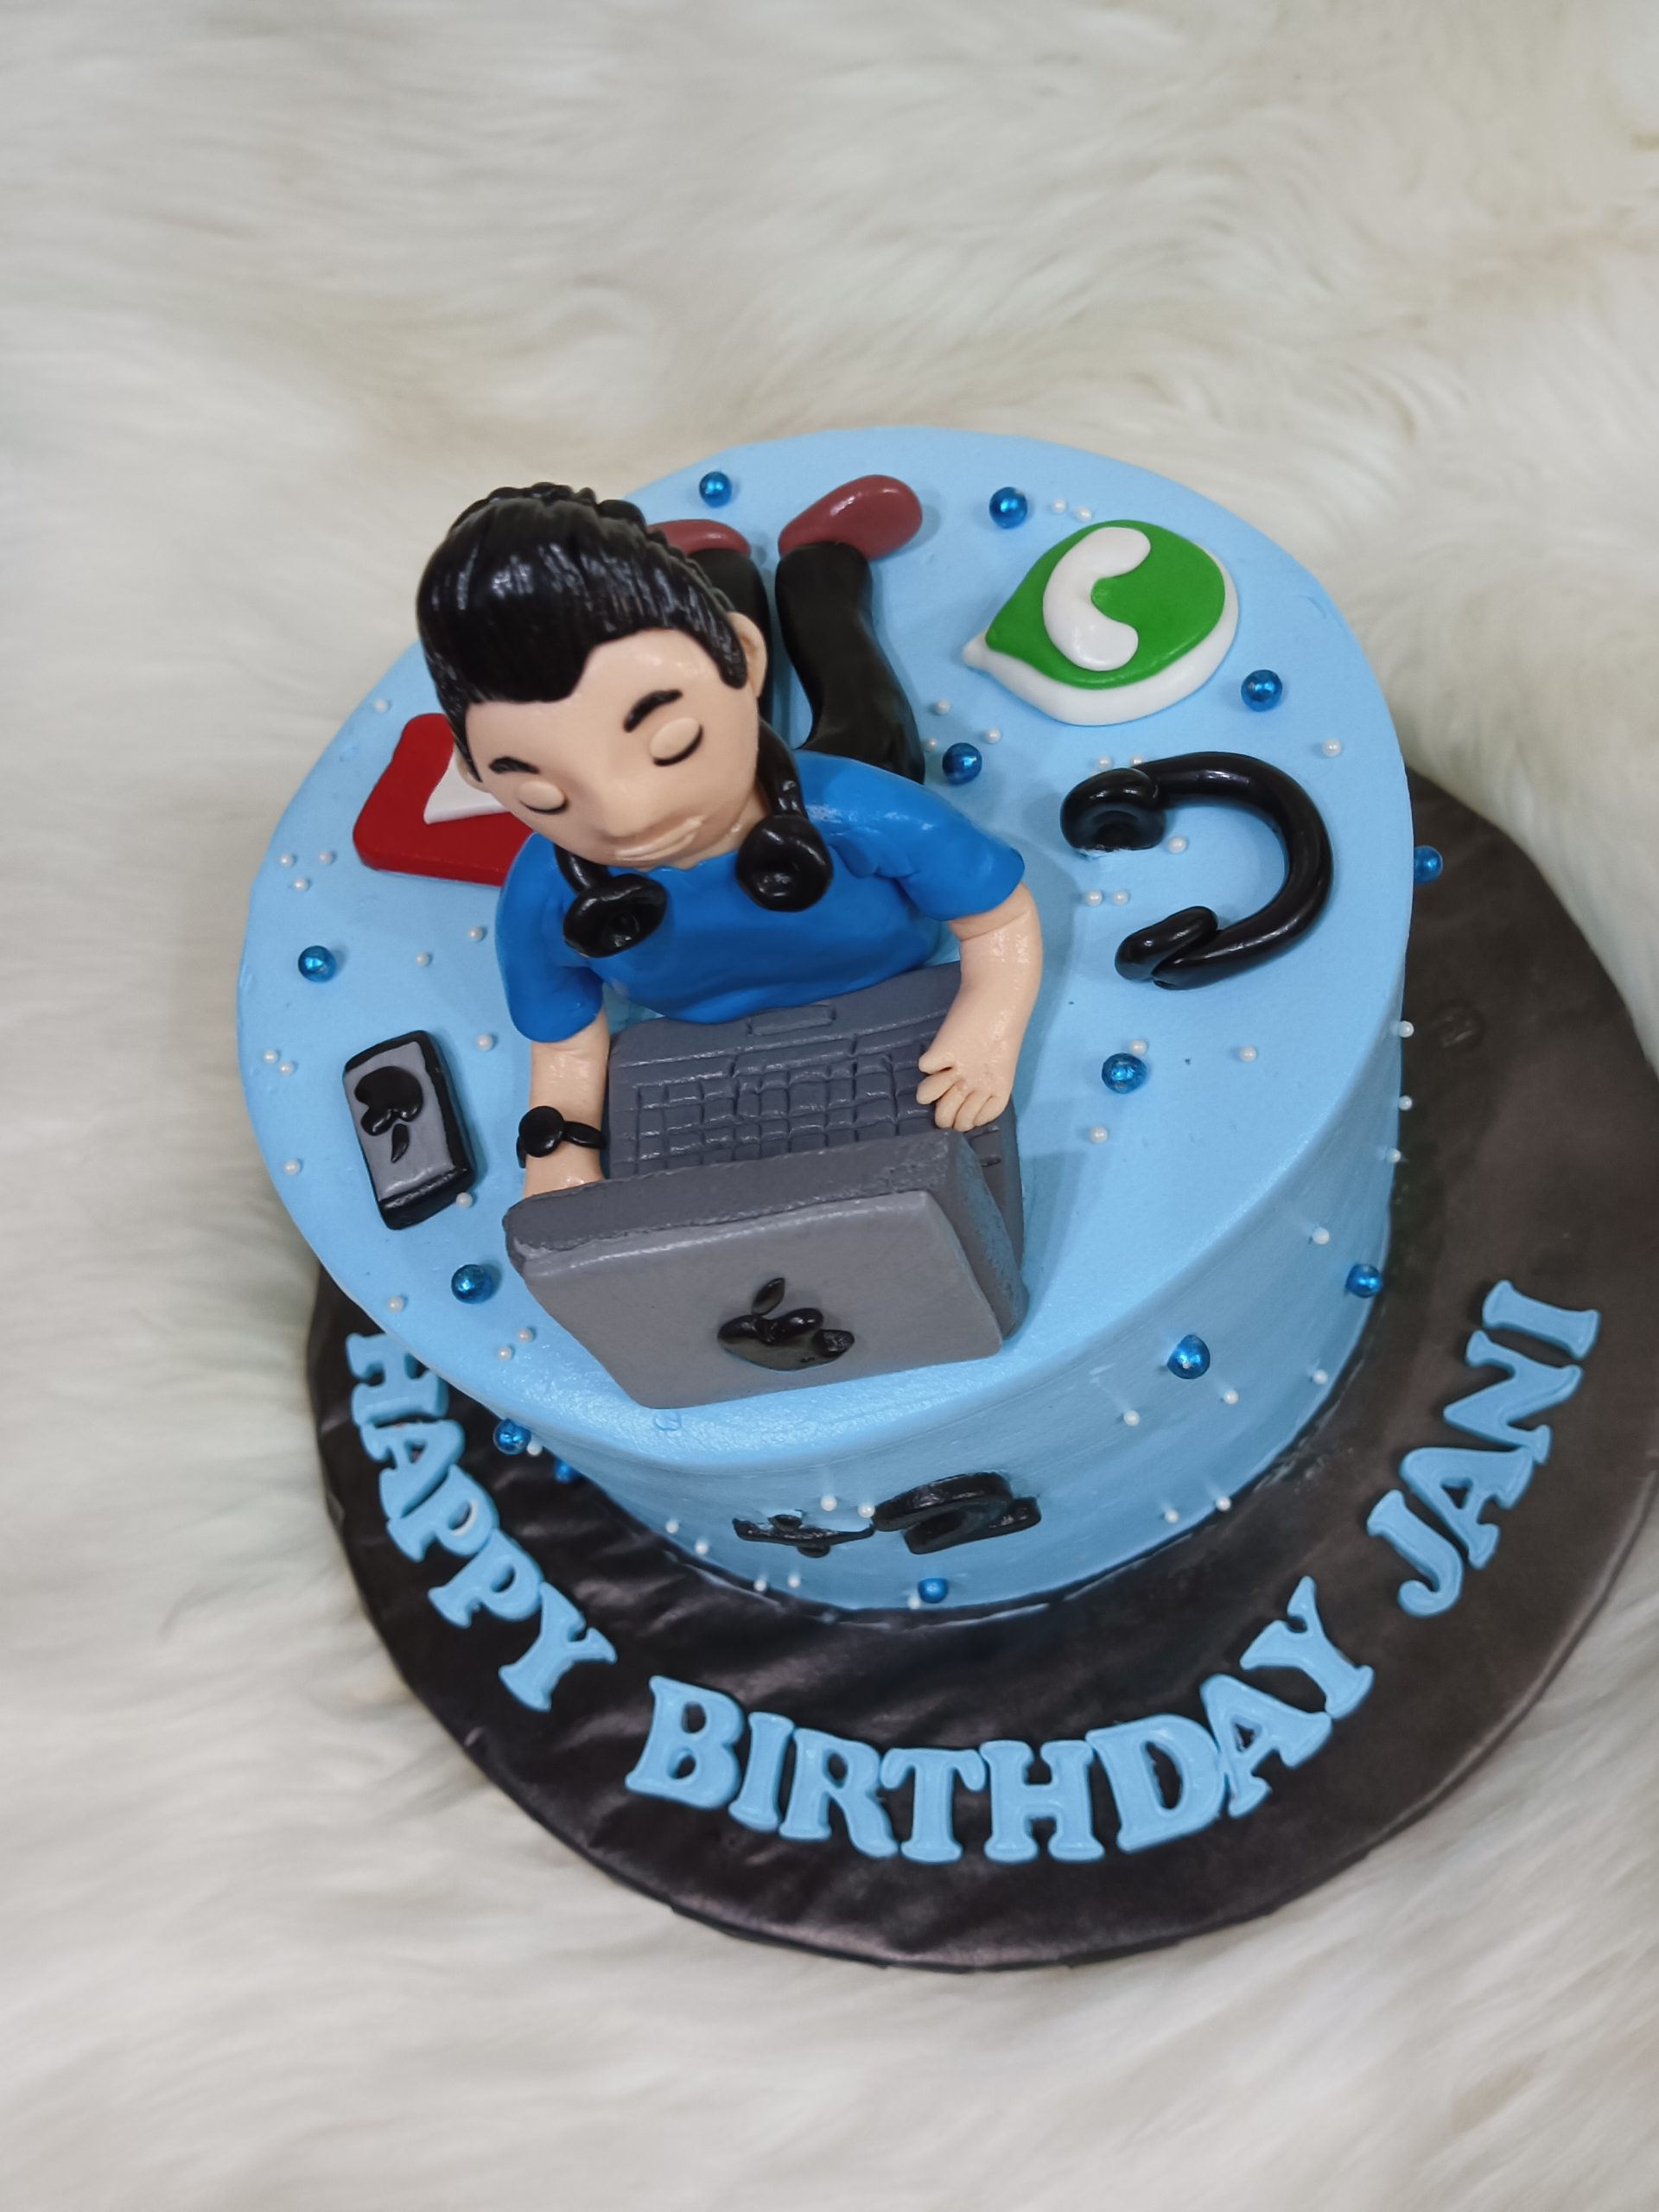 Birthday Cake for Programmers. - Programming Geeks | Facebook